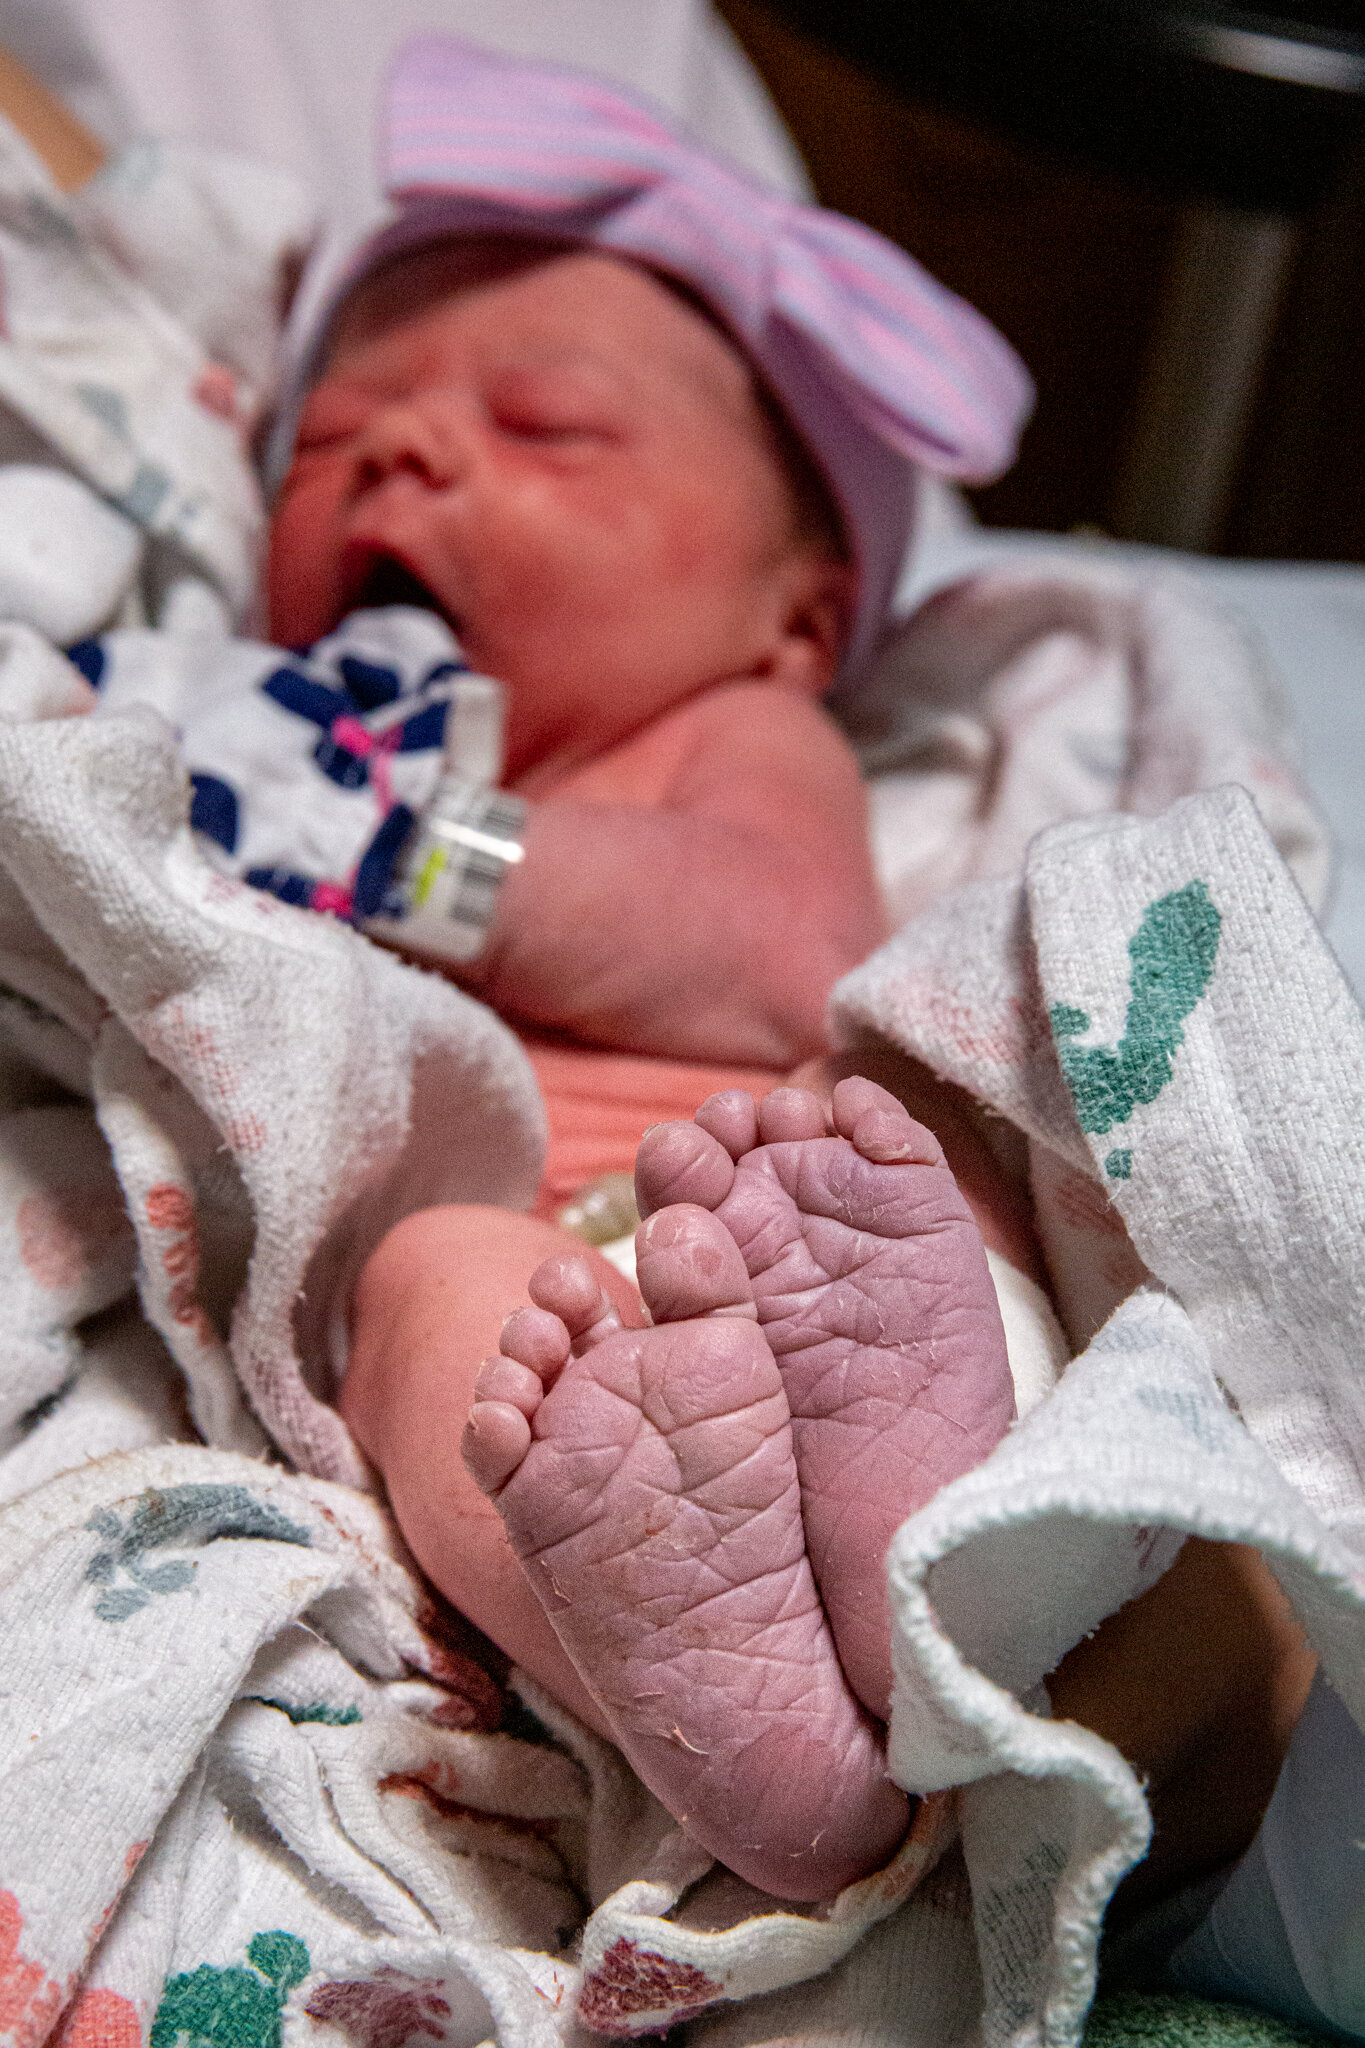 A newborn baby's pink, wrinkly feet.